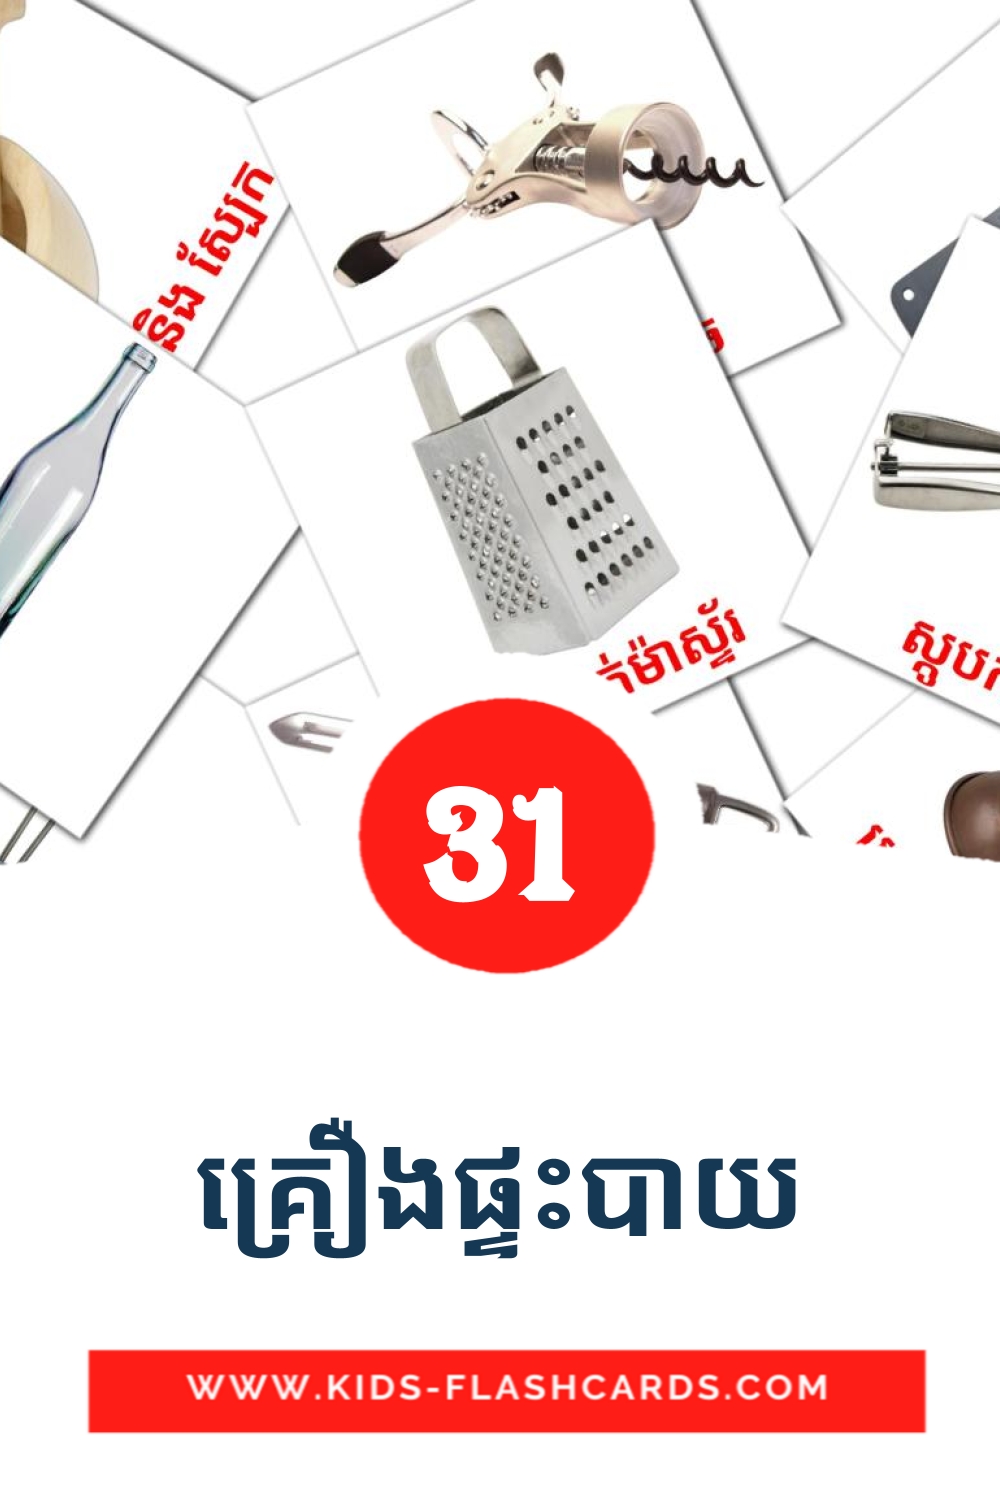 31 carte illustrate di គ្រឿងផ្ទះបាយ per la scuola materna in khmer